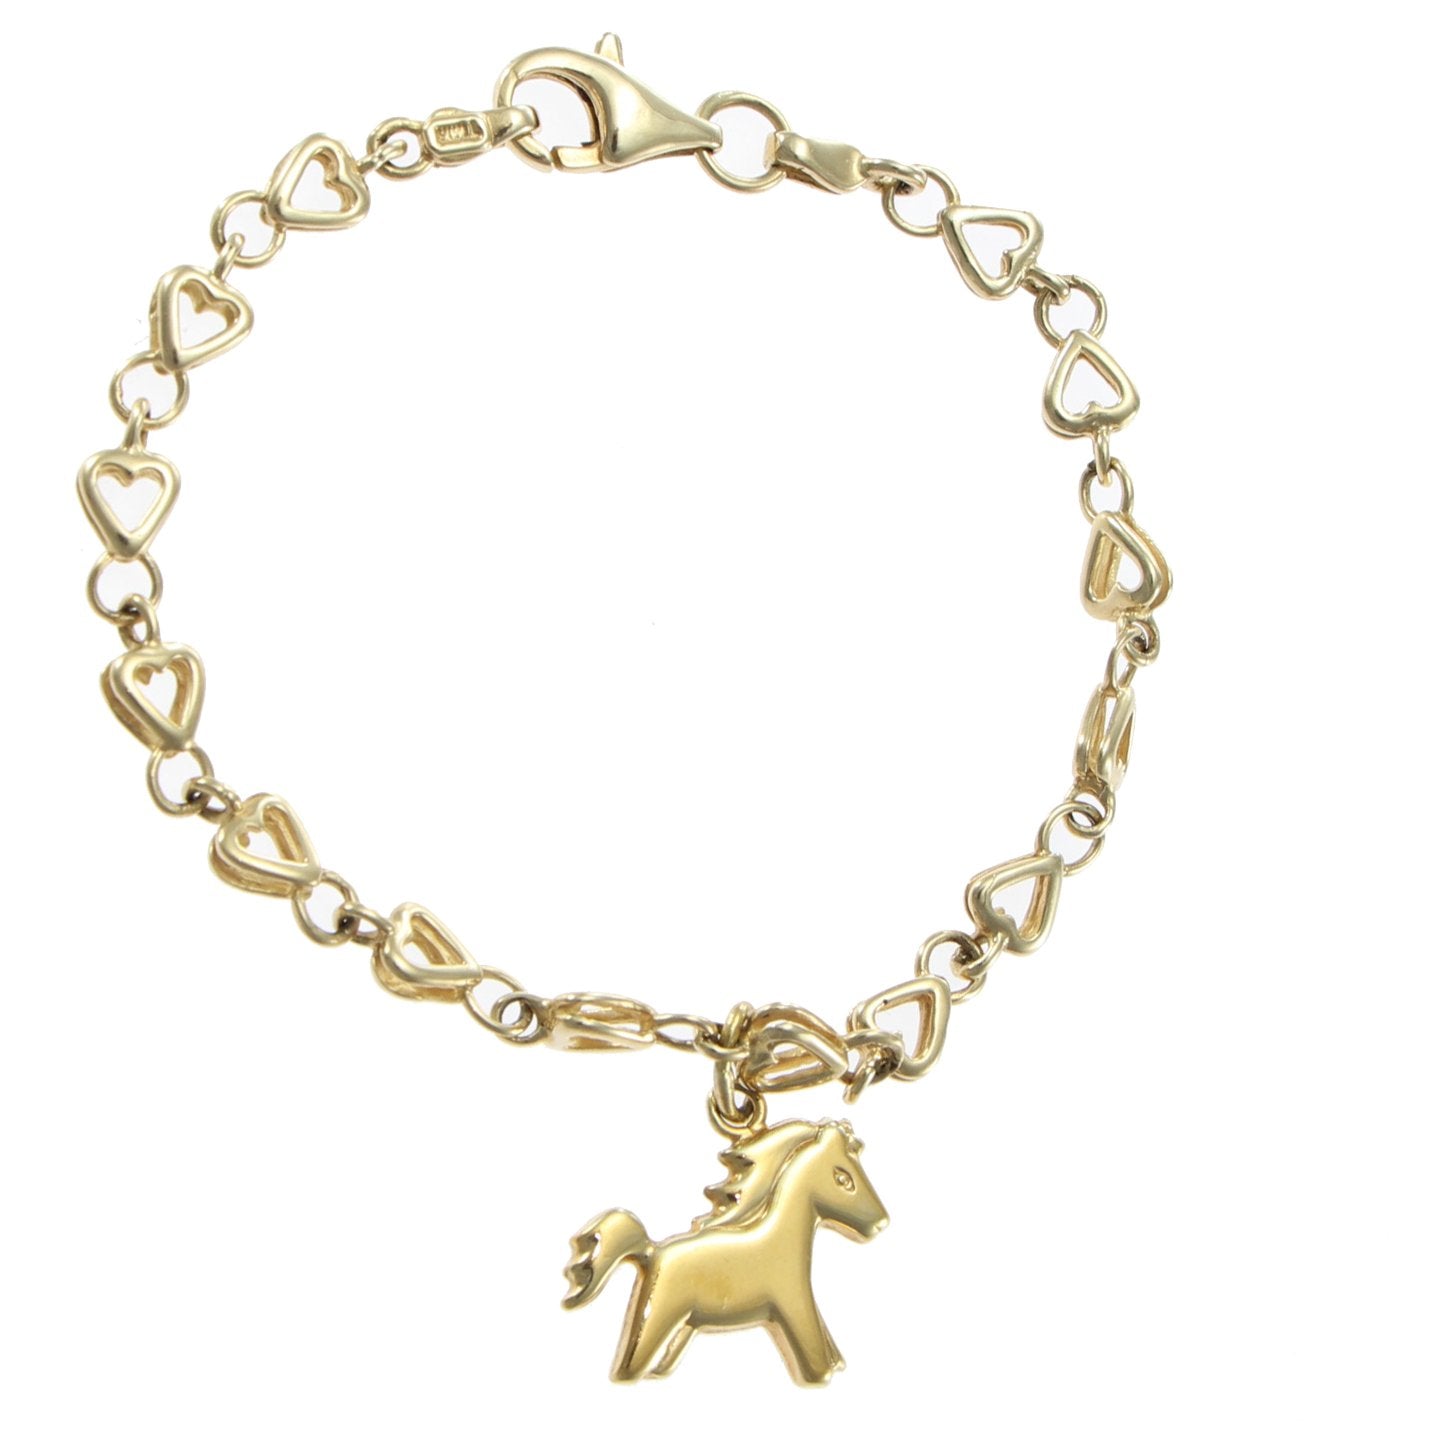 Pony Charm Baby Love Heart Bracelet 14k Yellow Gold Chain Link 5mm 5.5inch  5.1g